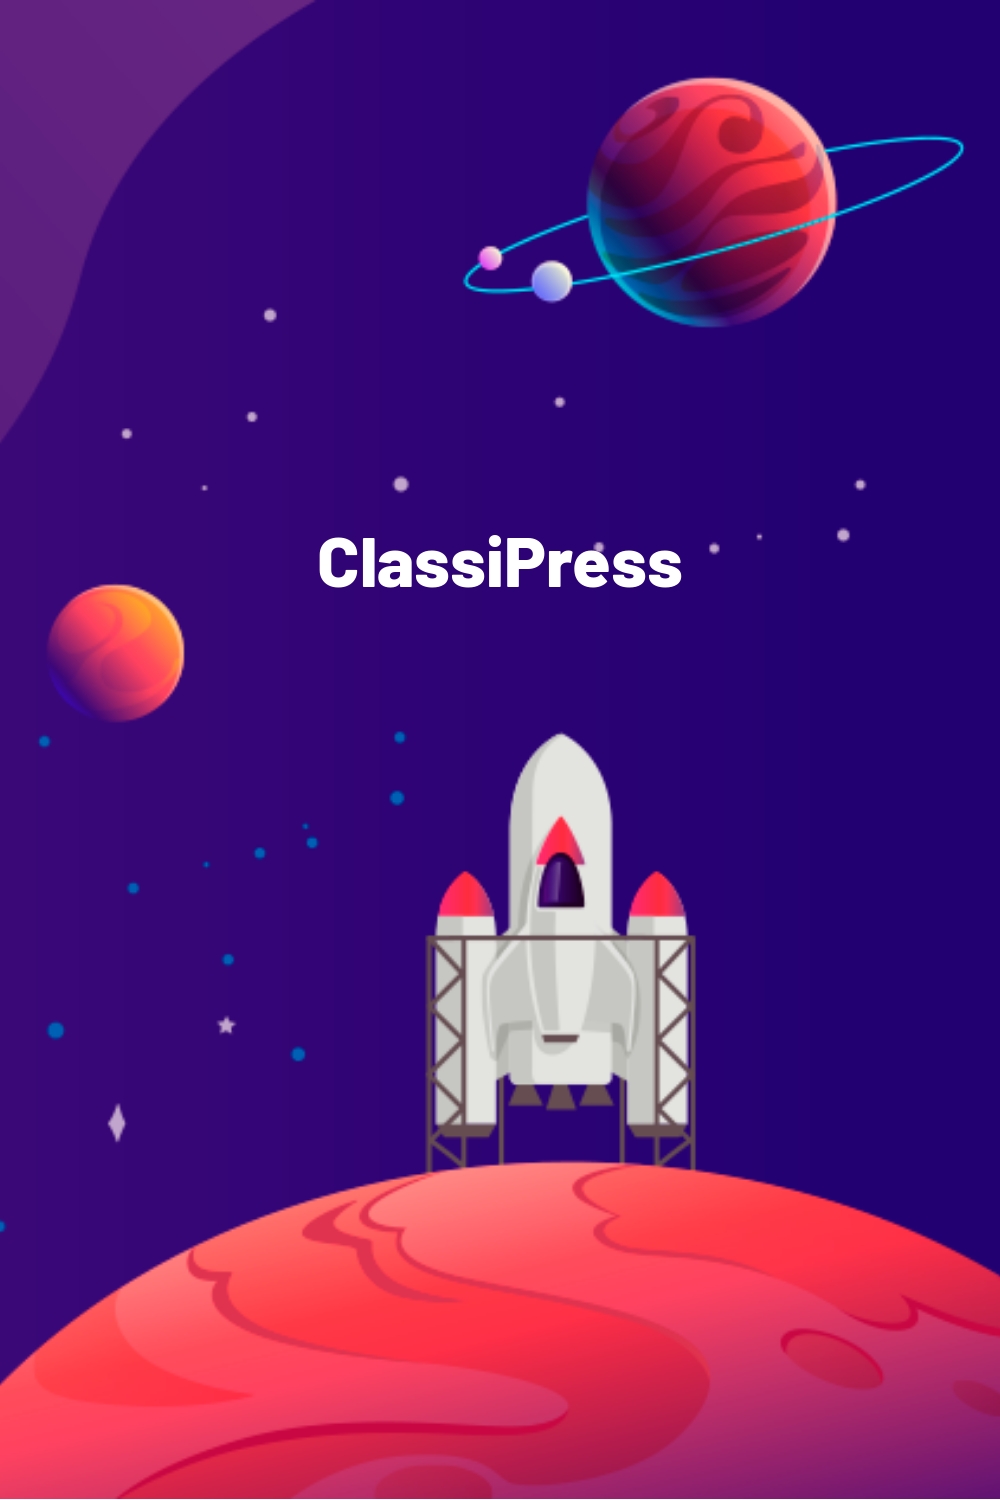 ClassiPress